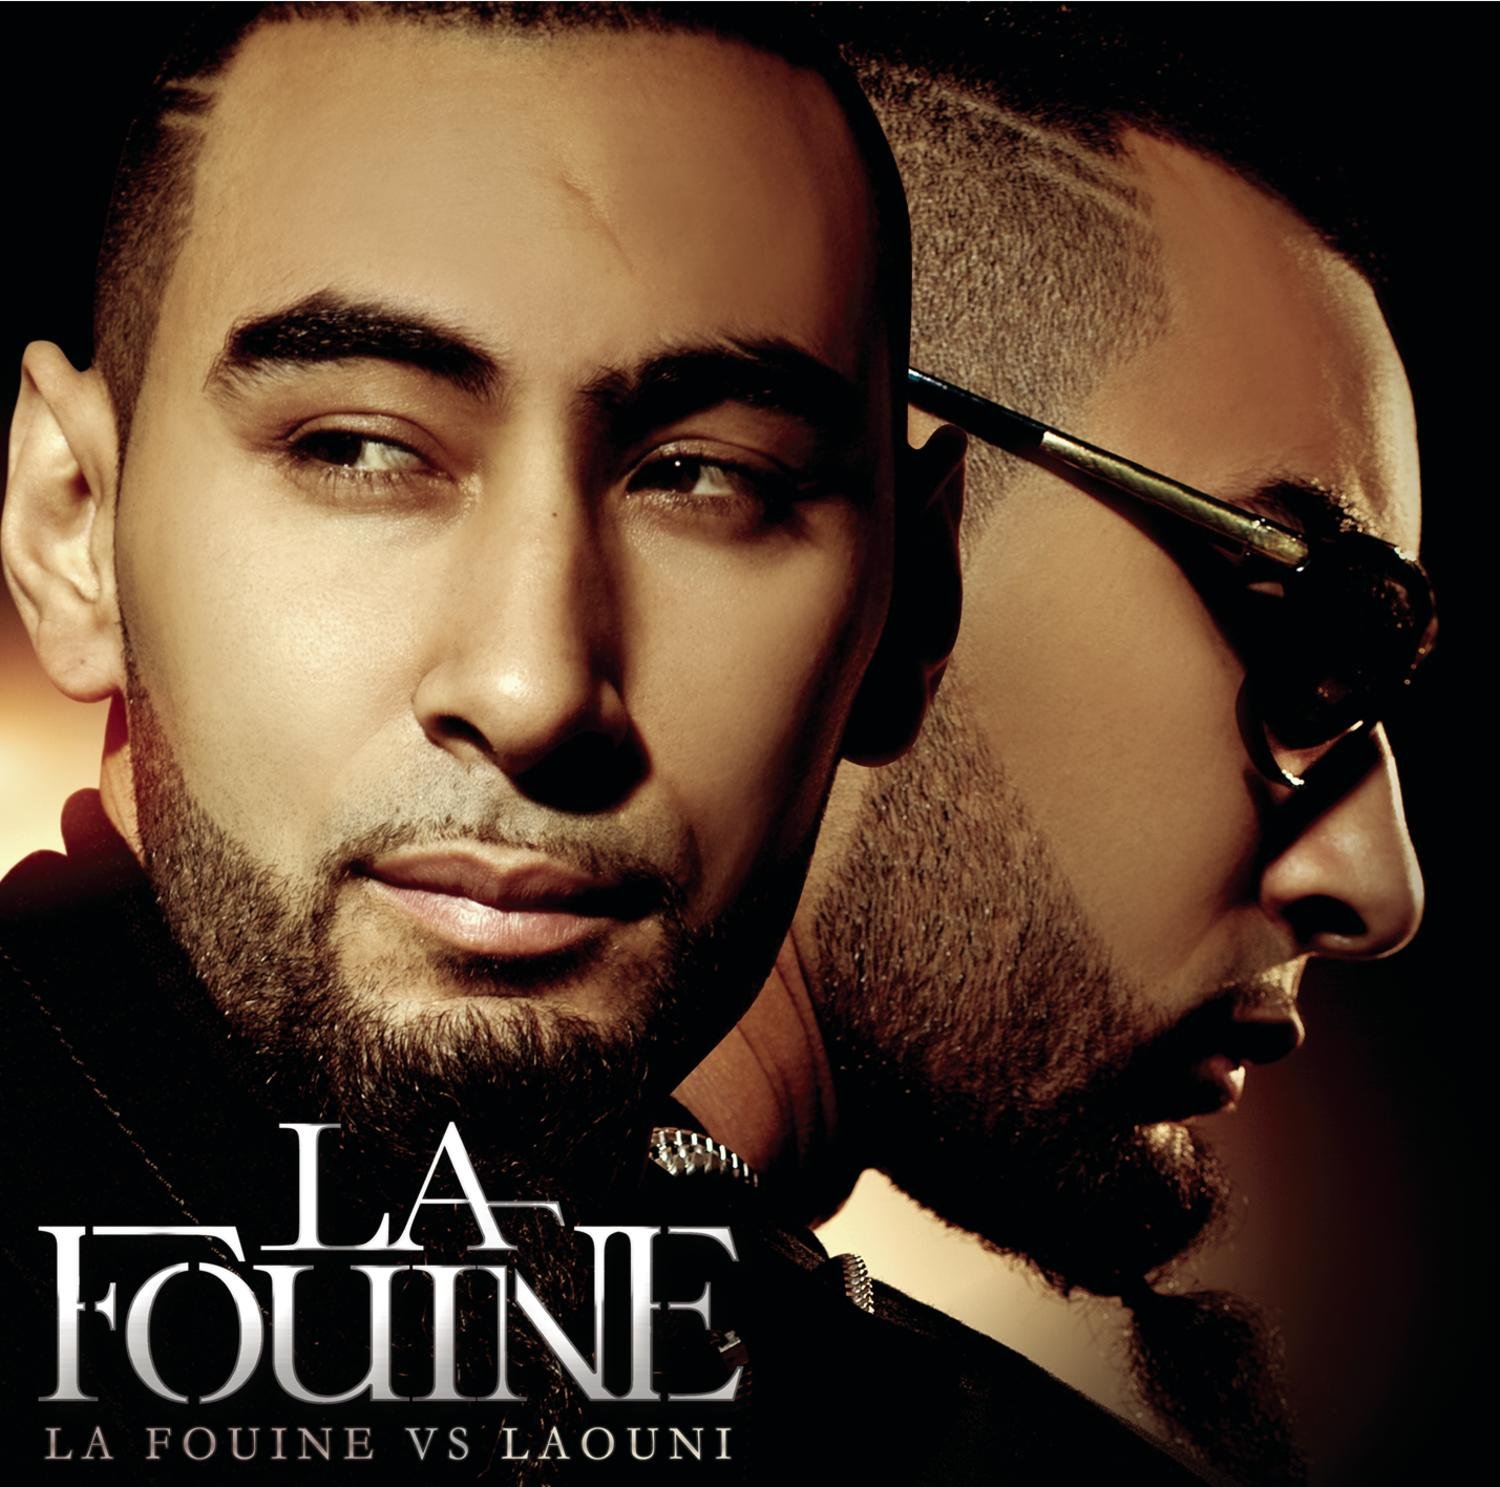 La Fouine vs Laouni by La Fouine | Album